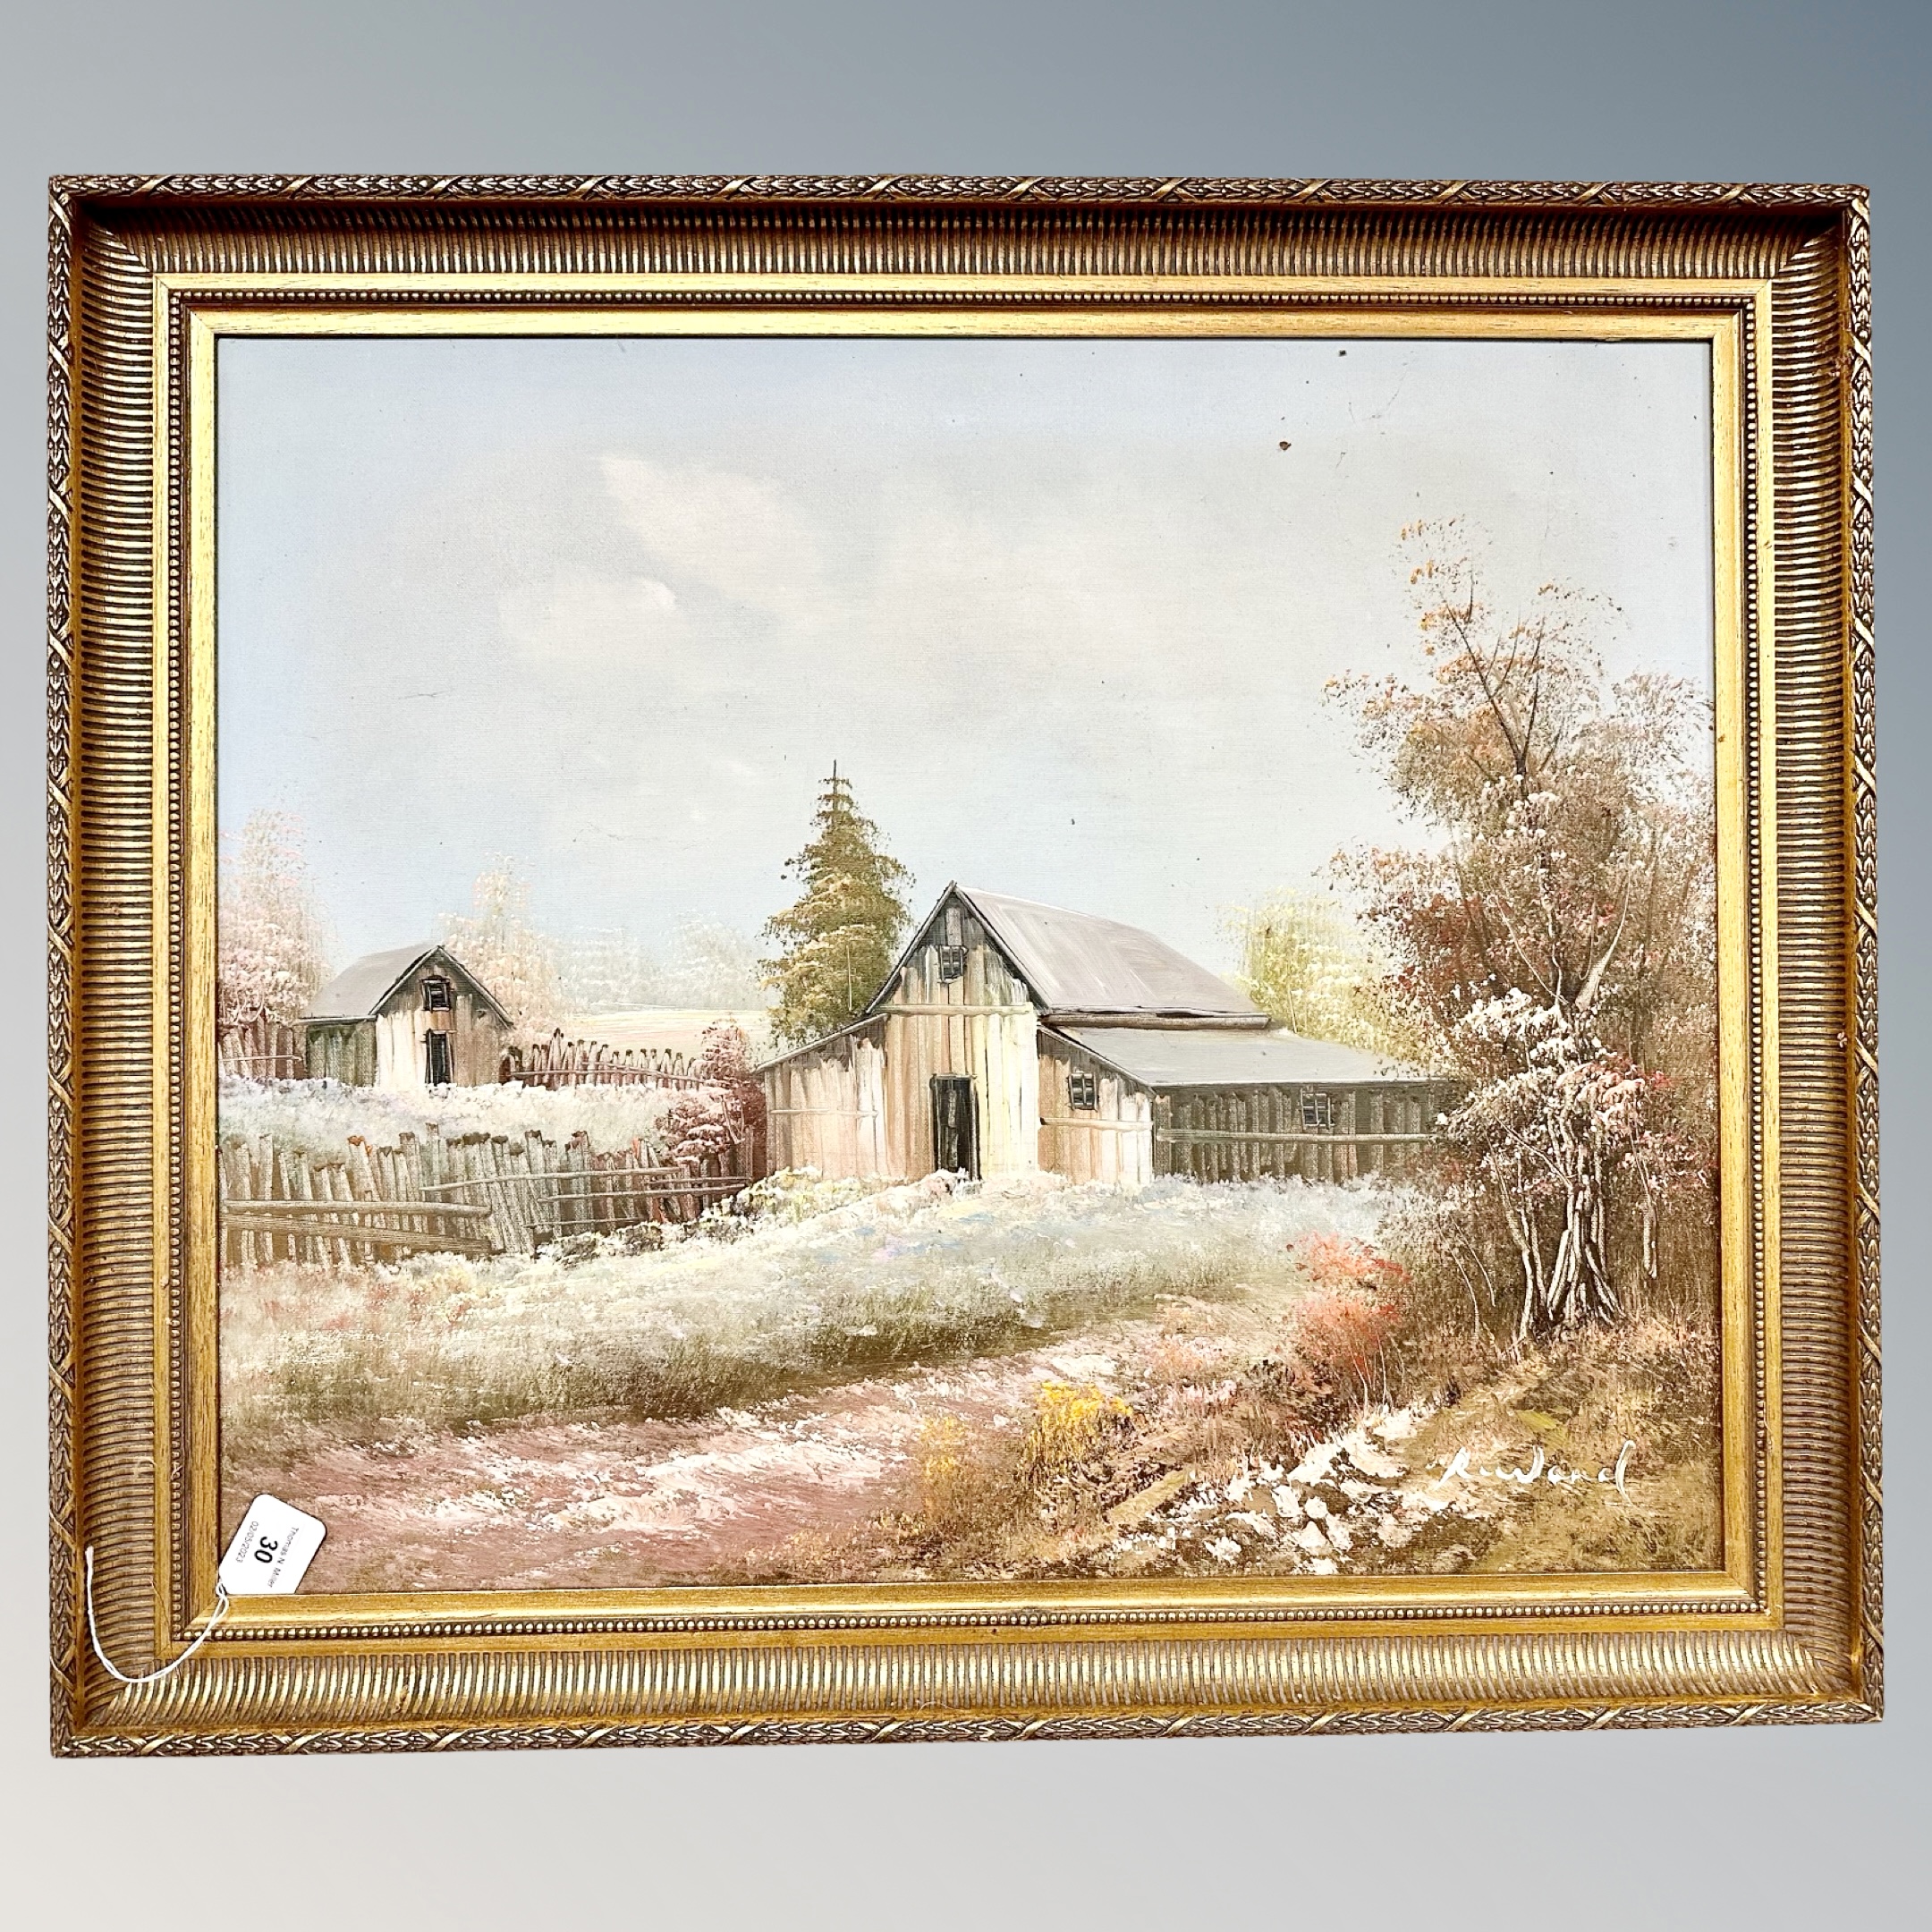 R Ward : Agricultural barn, oil on canvas, 59cm by 50cm.